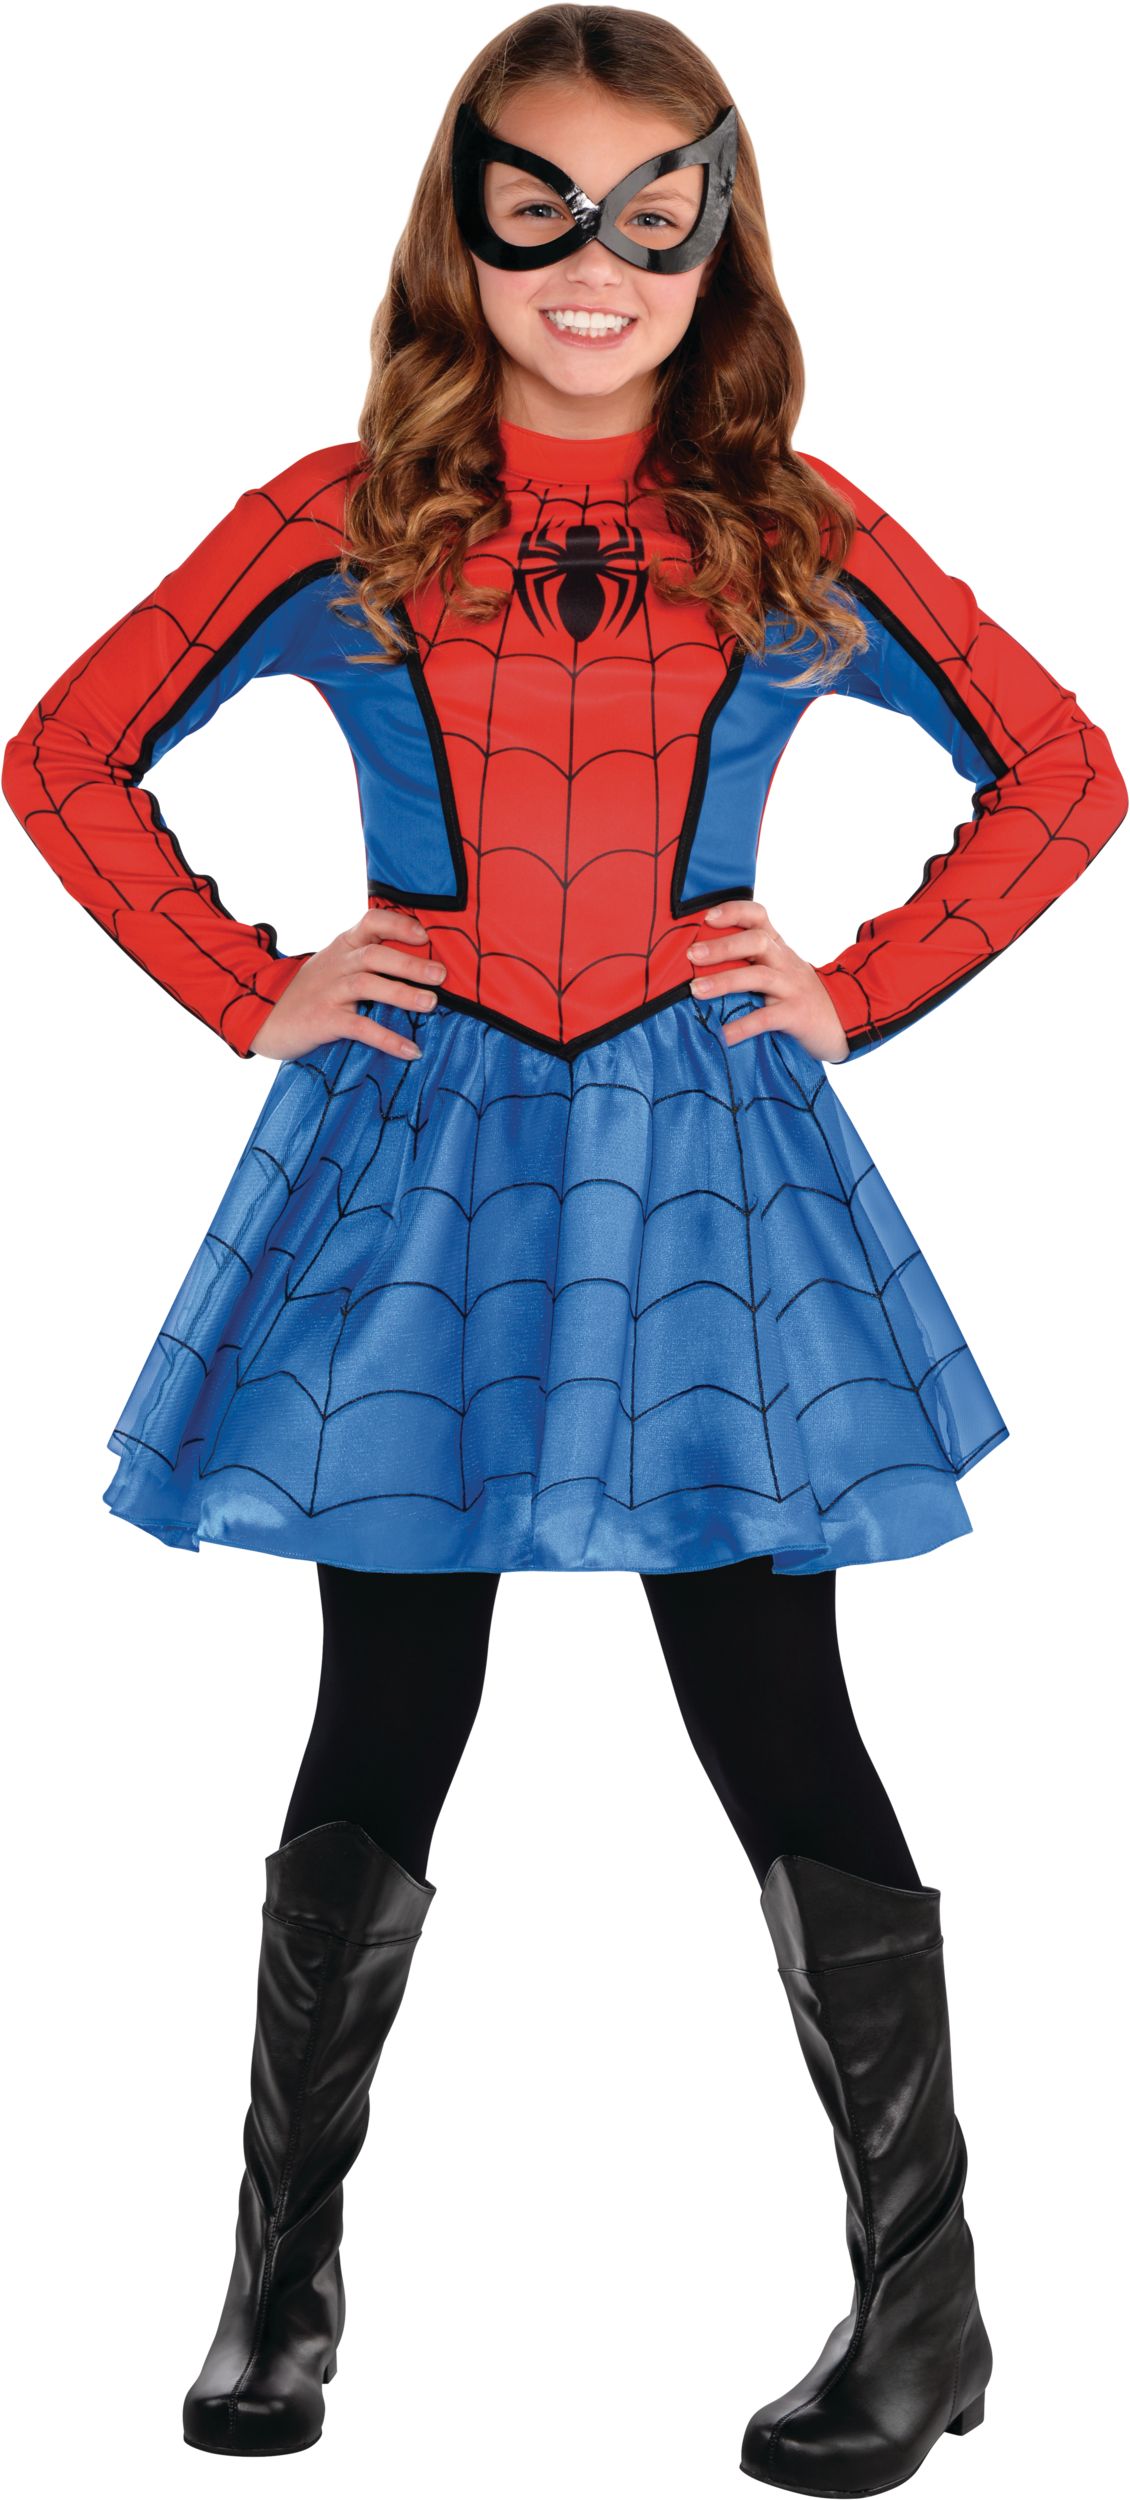 Costume Spiderman Avec Masque, Combinaison Cosplay, Halloween